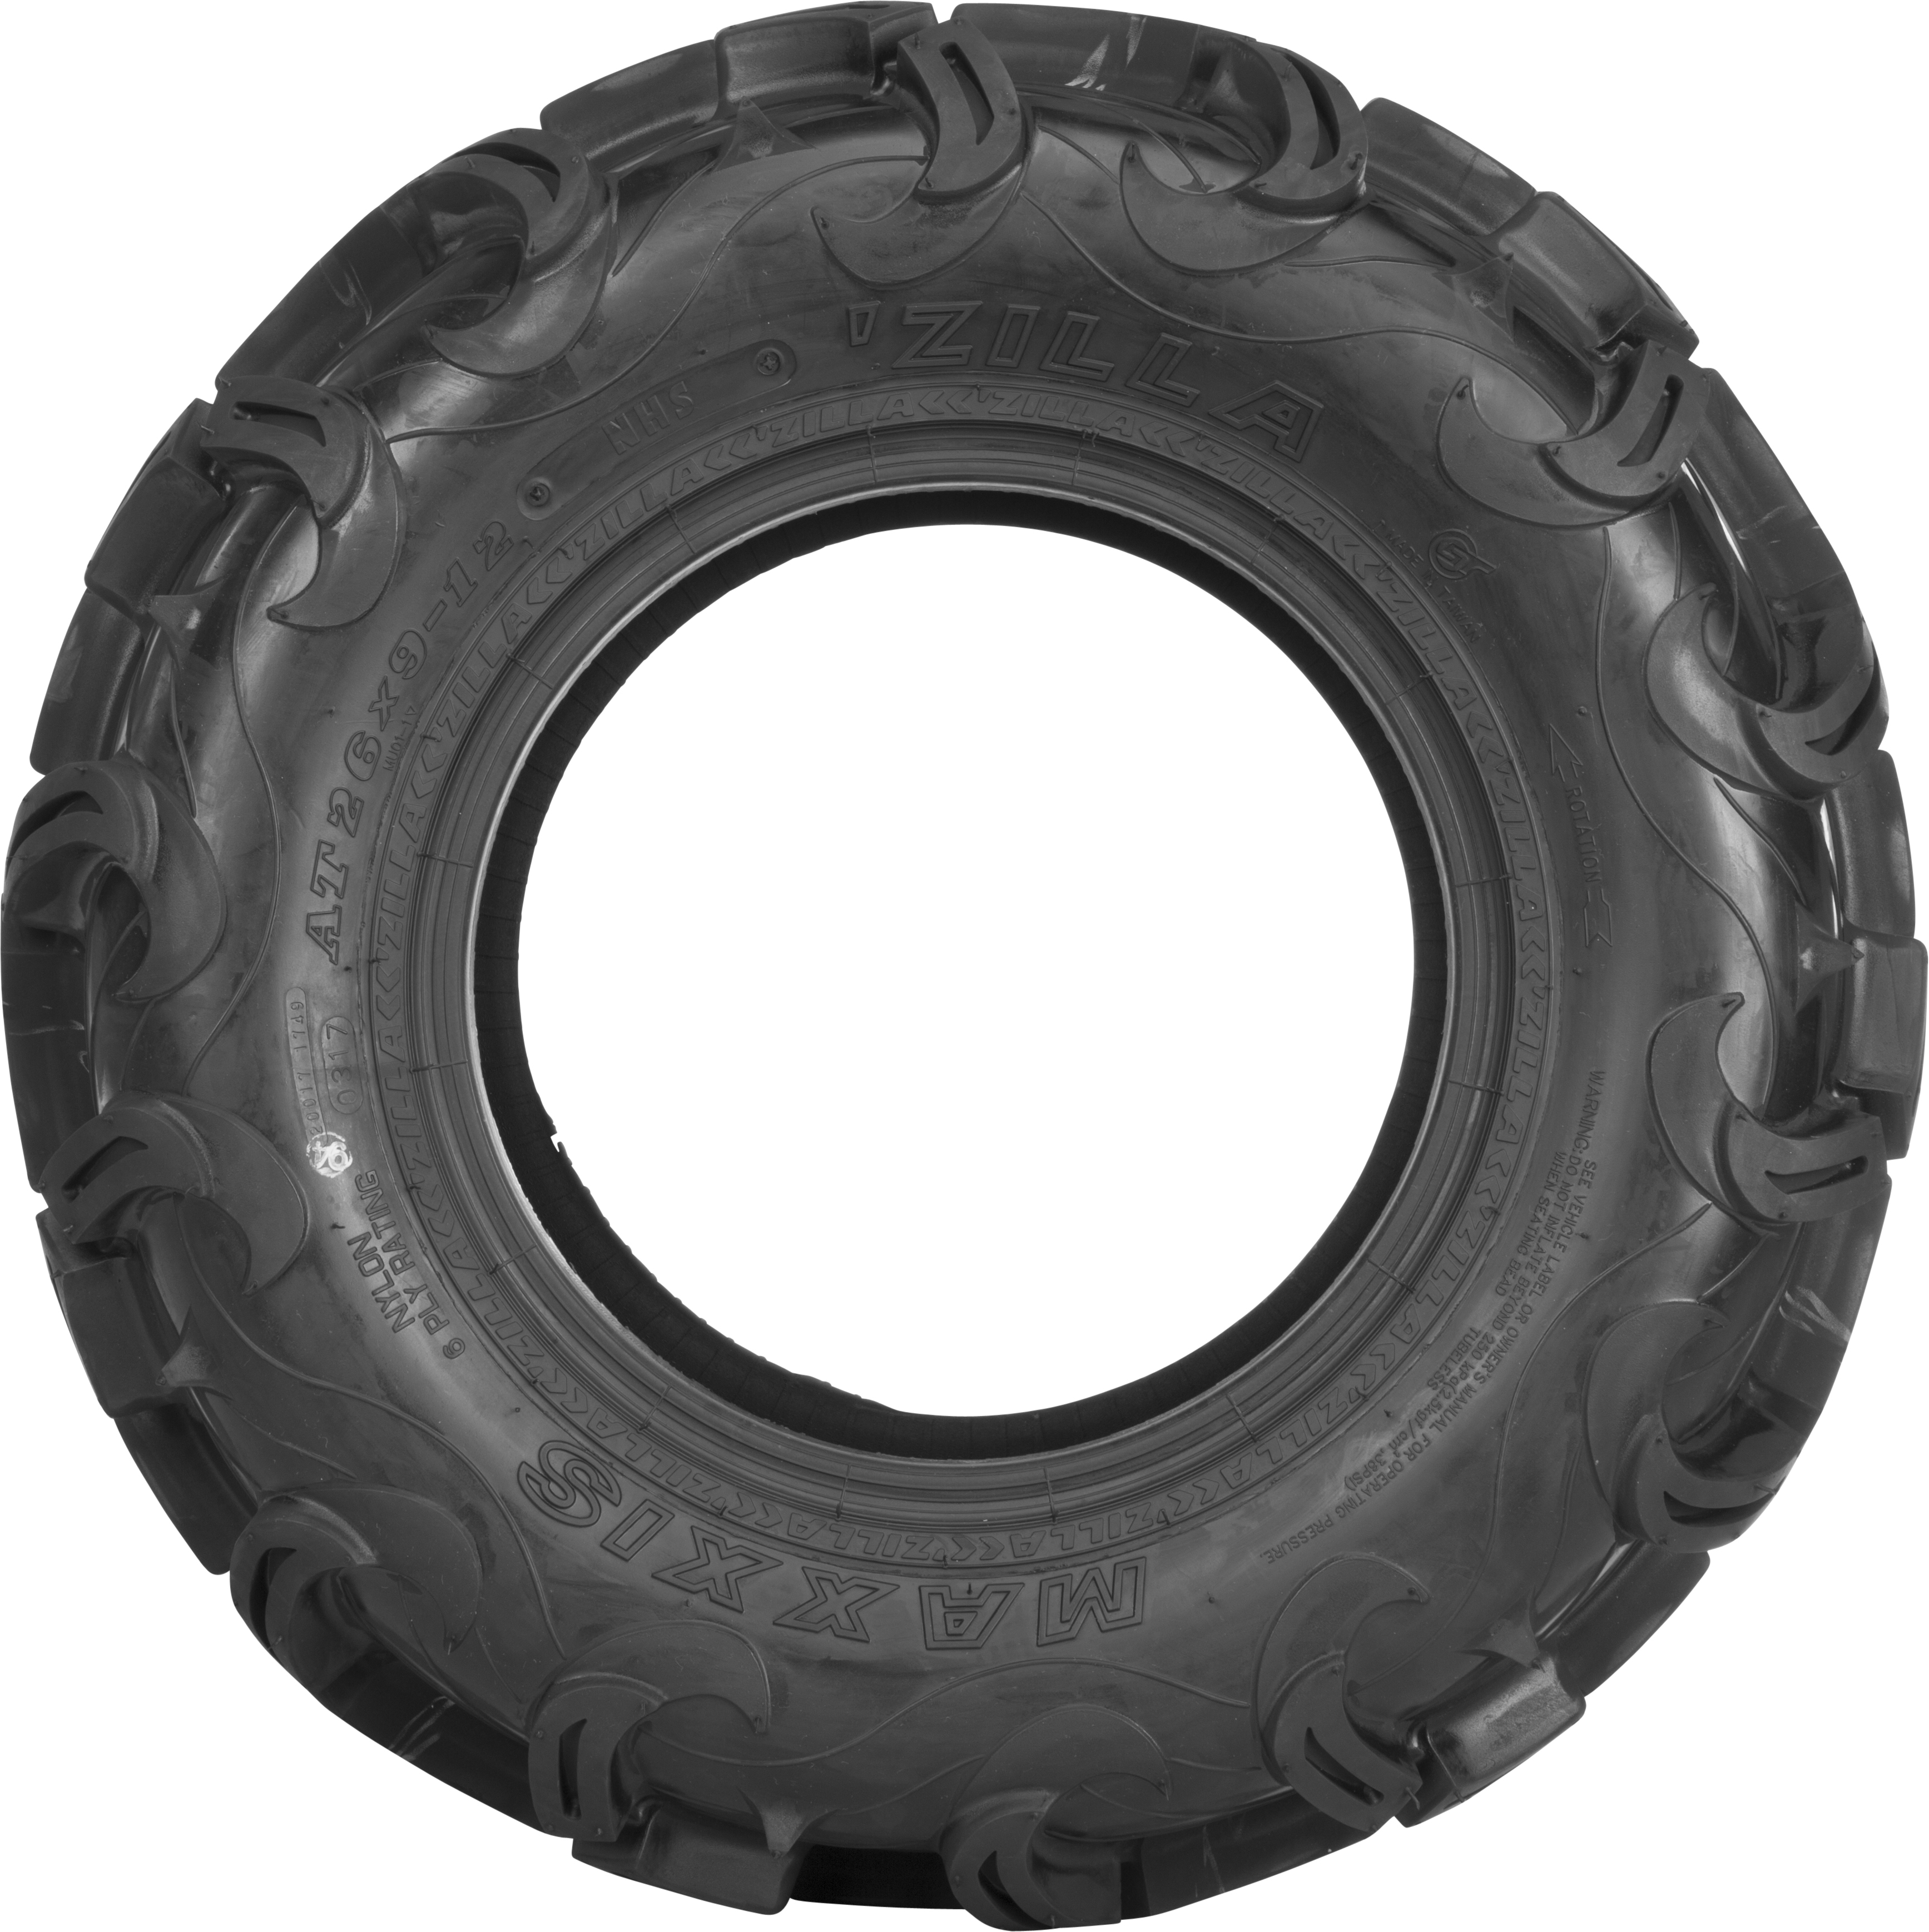 Zilla 25X8-12 6 Ply Rating ATV Tire - Click Image to Close